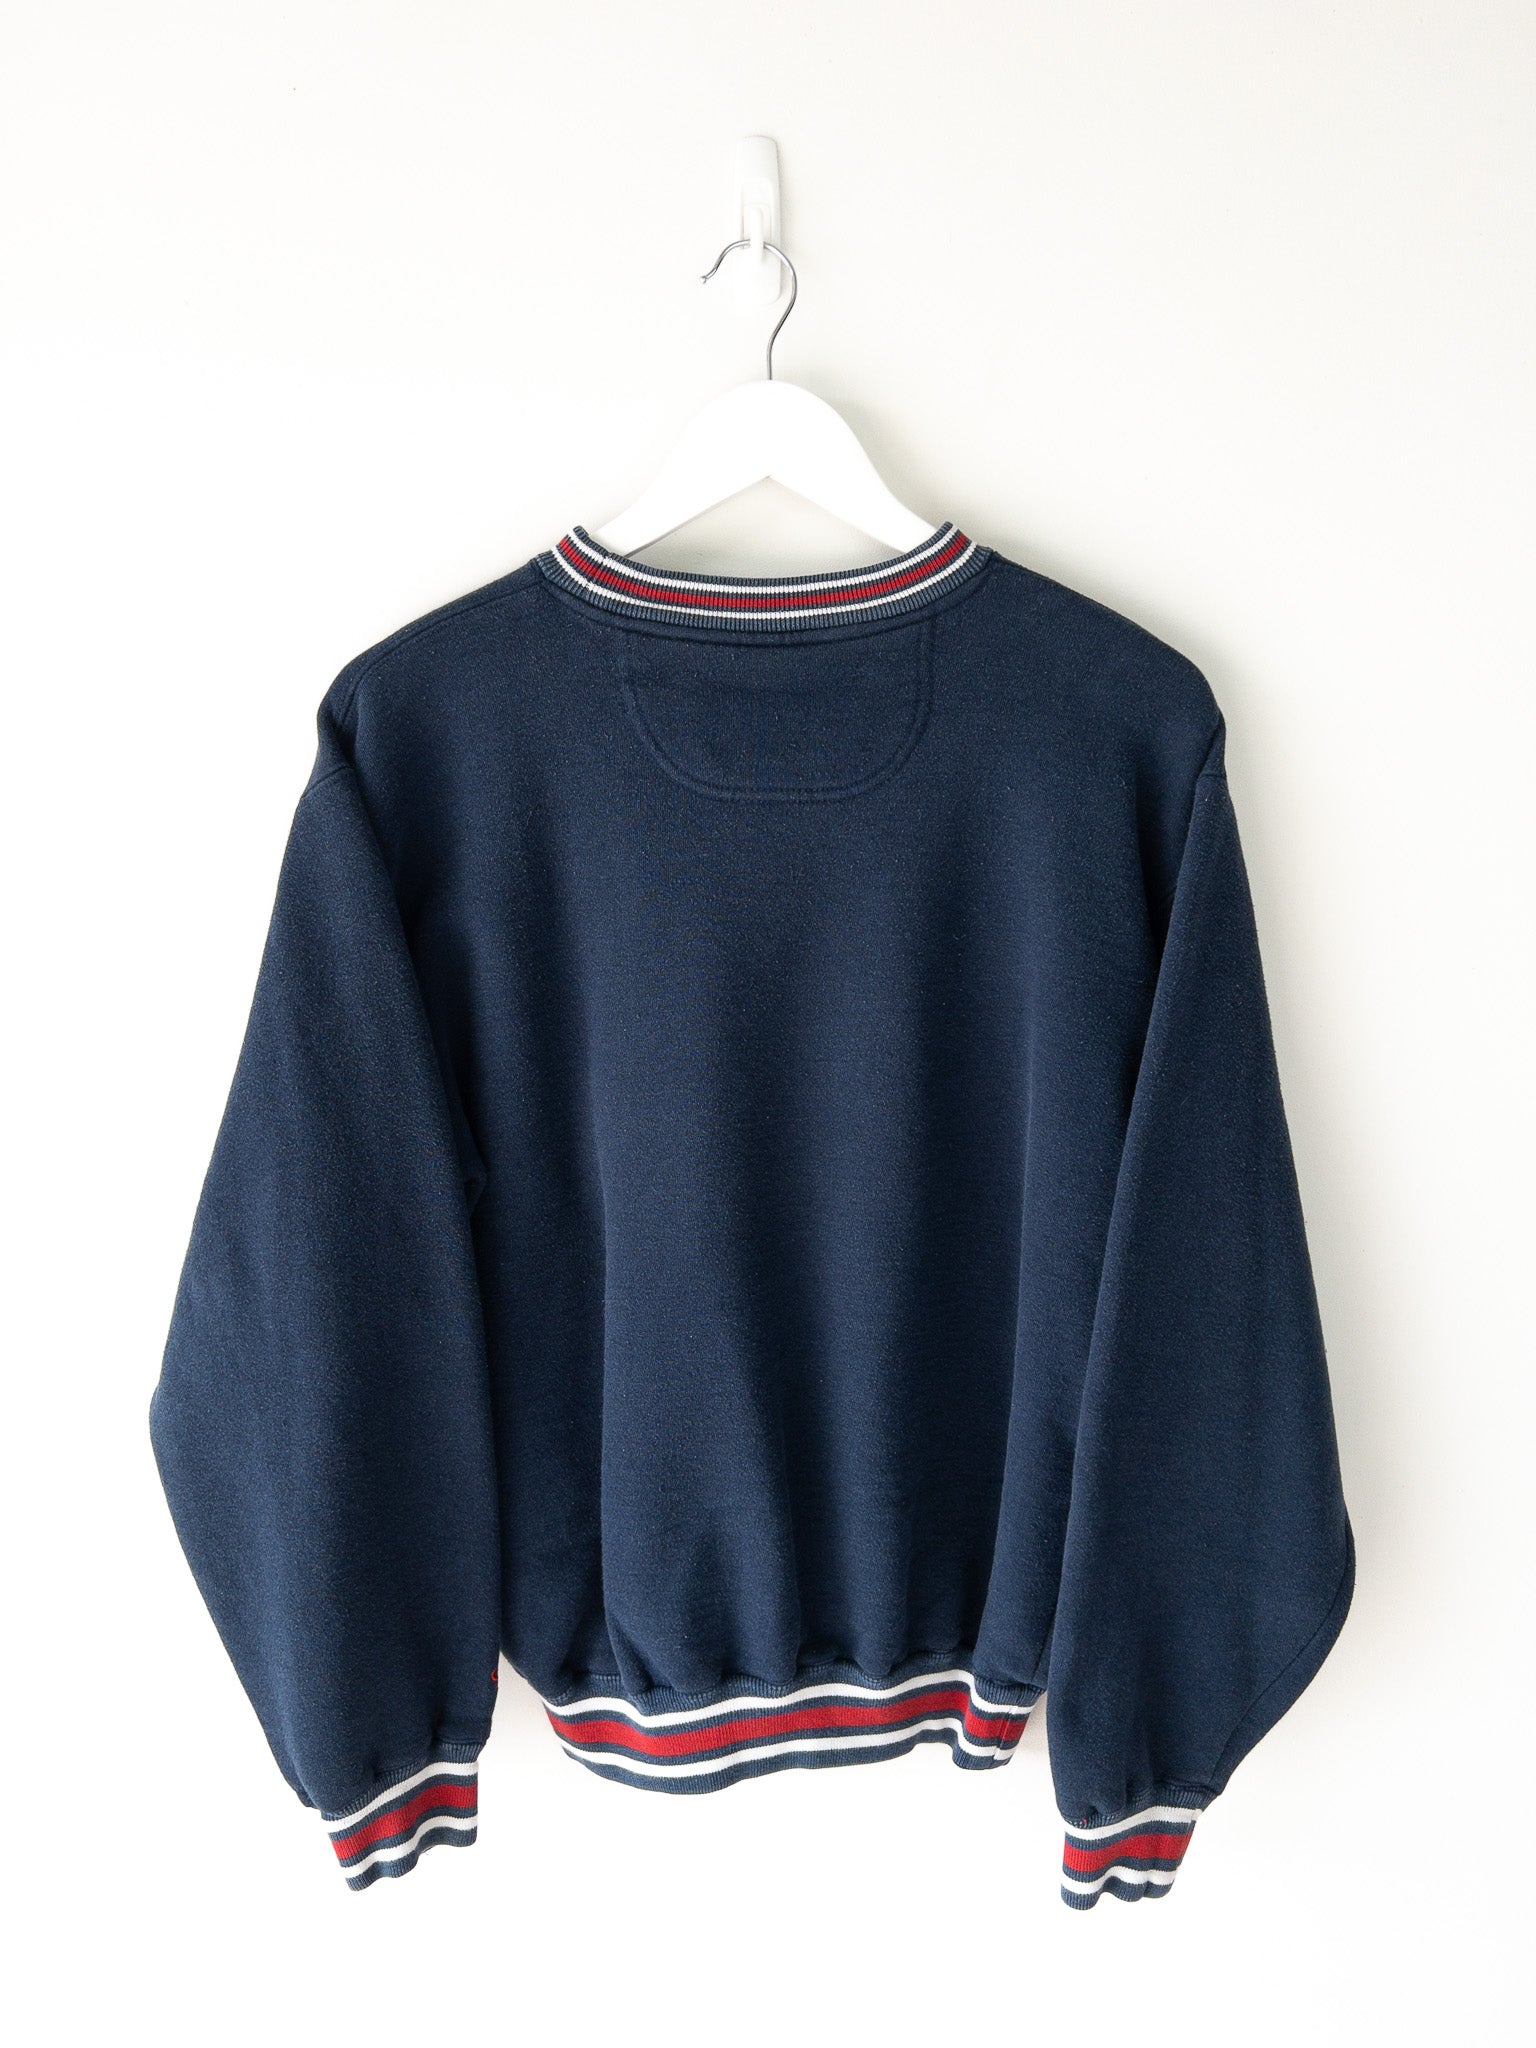 Vintage Atlanta Braves Sweatshirt (M)